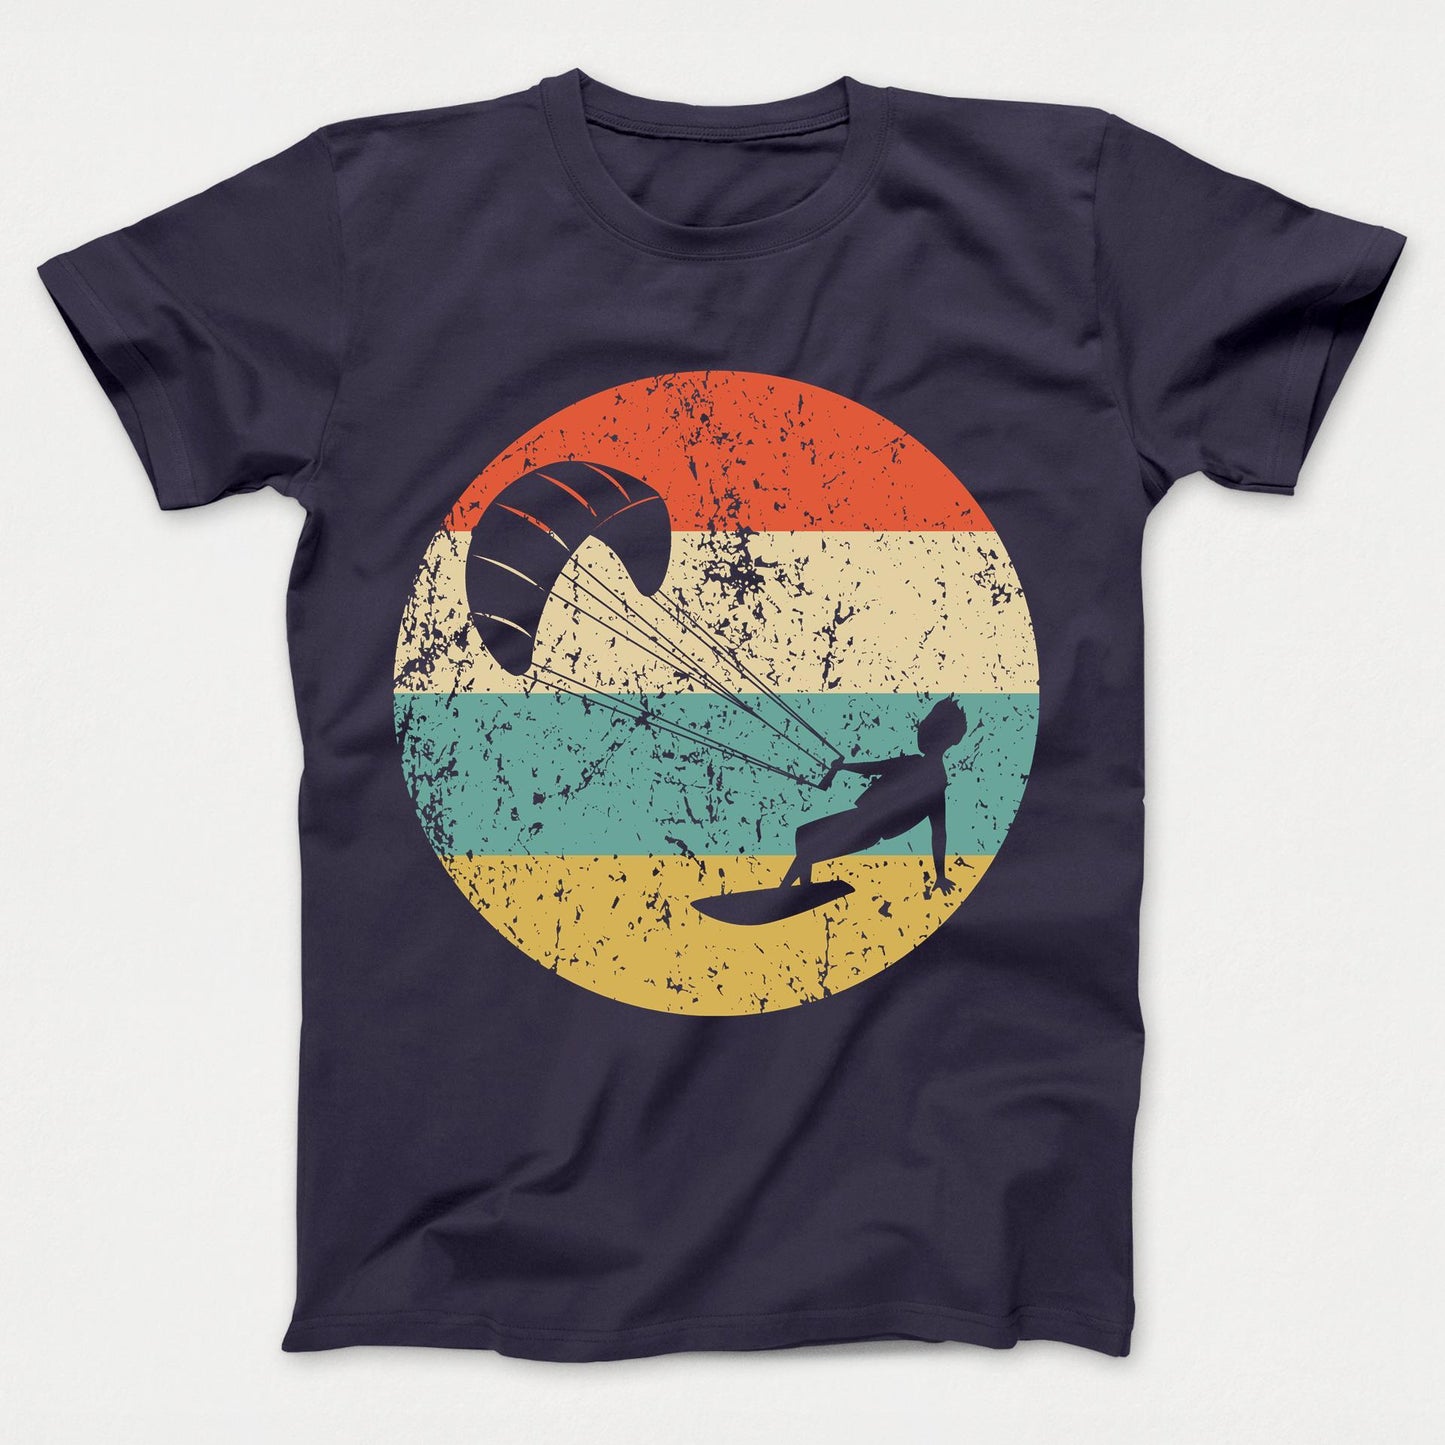 Kite Surfing Shirt - Vintage Retro Kite Surfer Kids T-Shirt